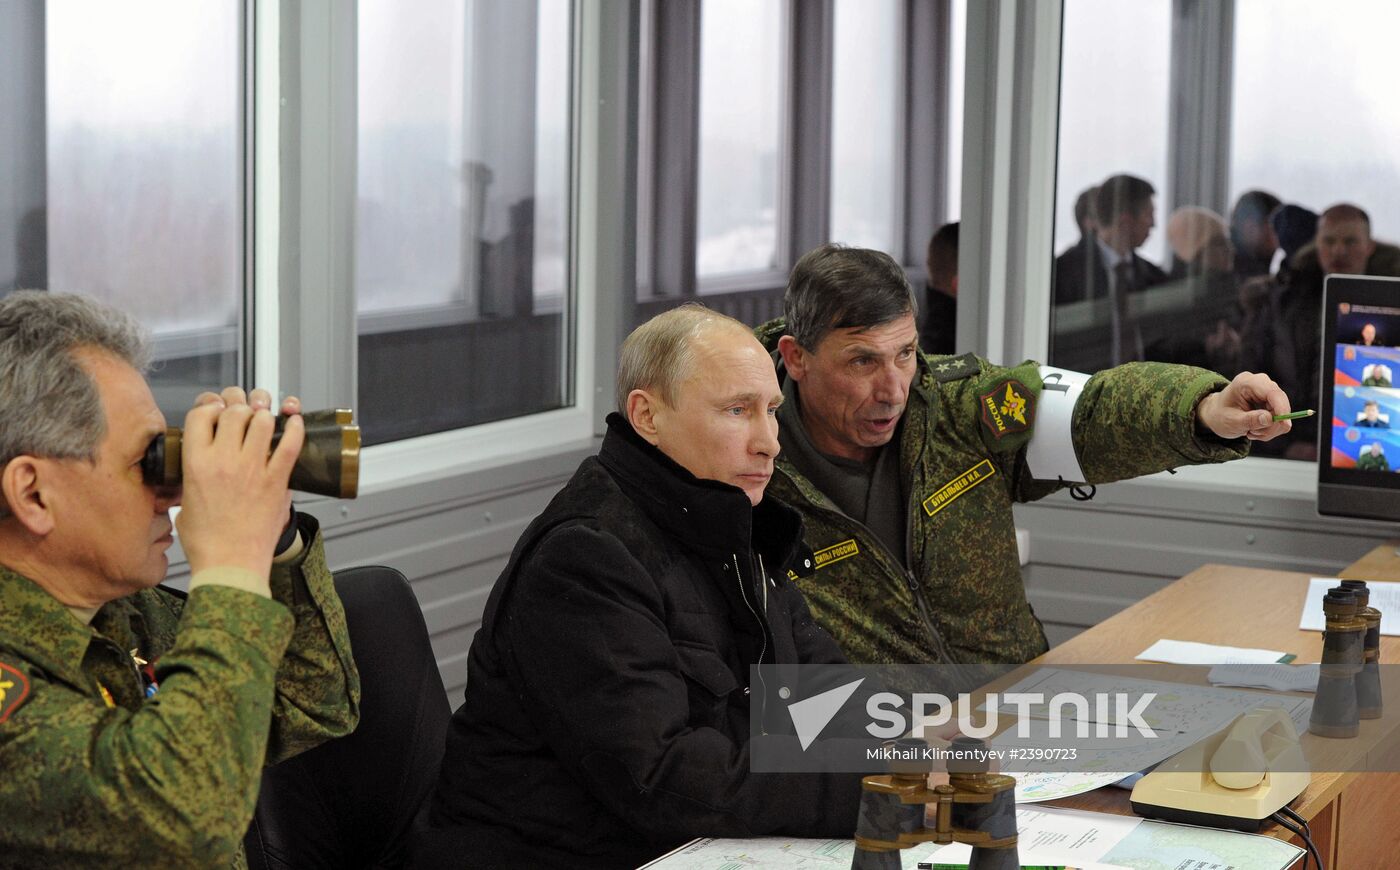 V.Putin's working visit to Leningrad Region